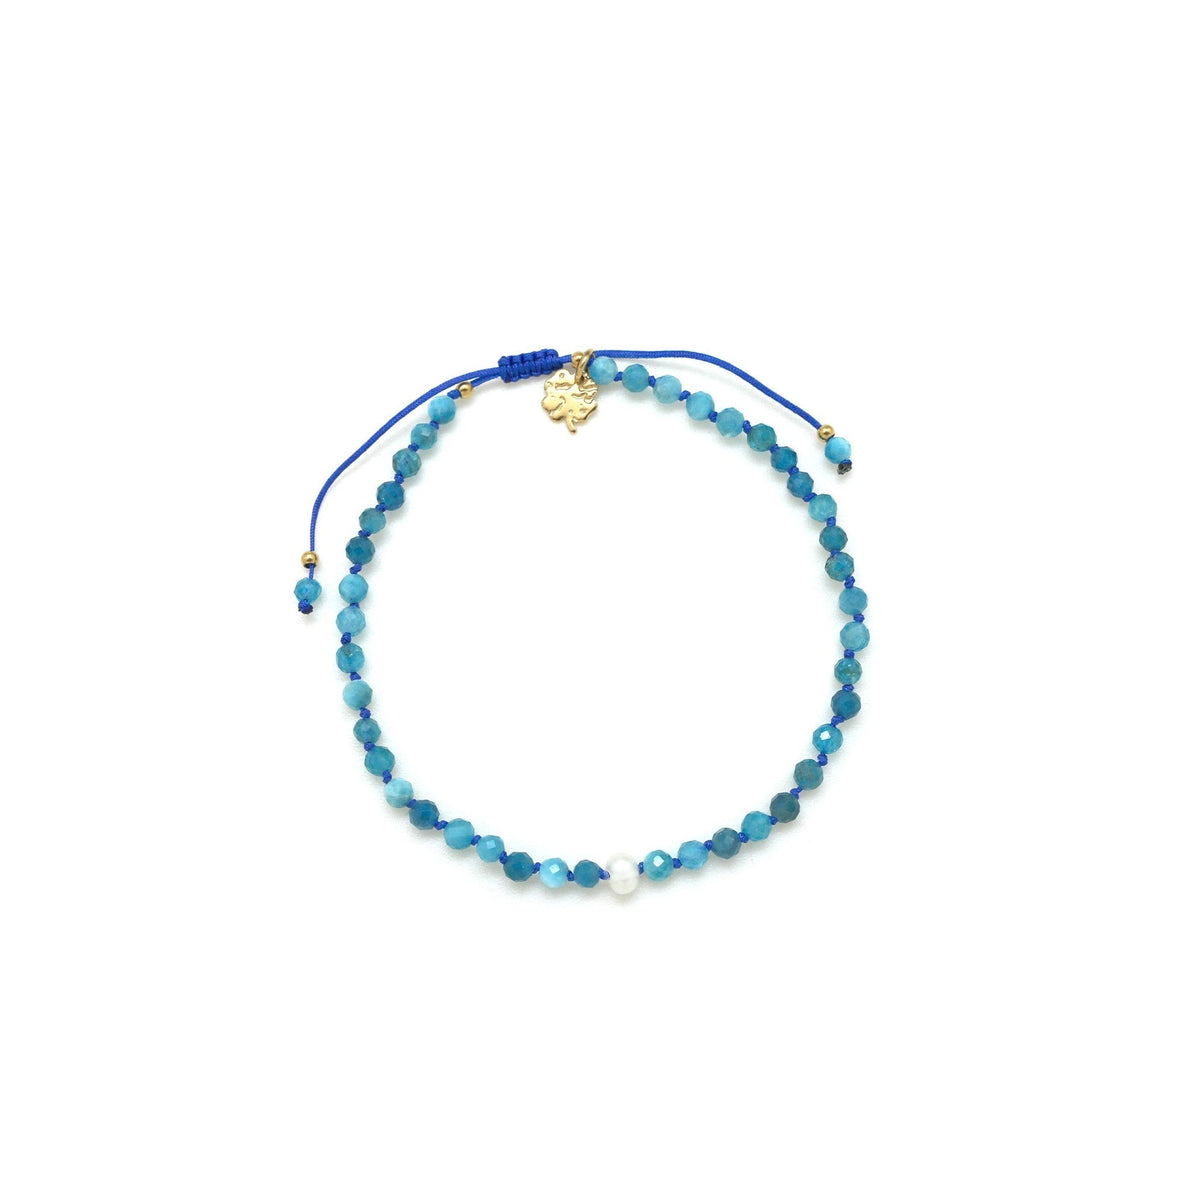 Adjustable apatite bracelet with water pearl